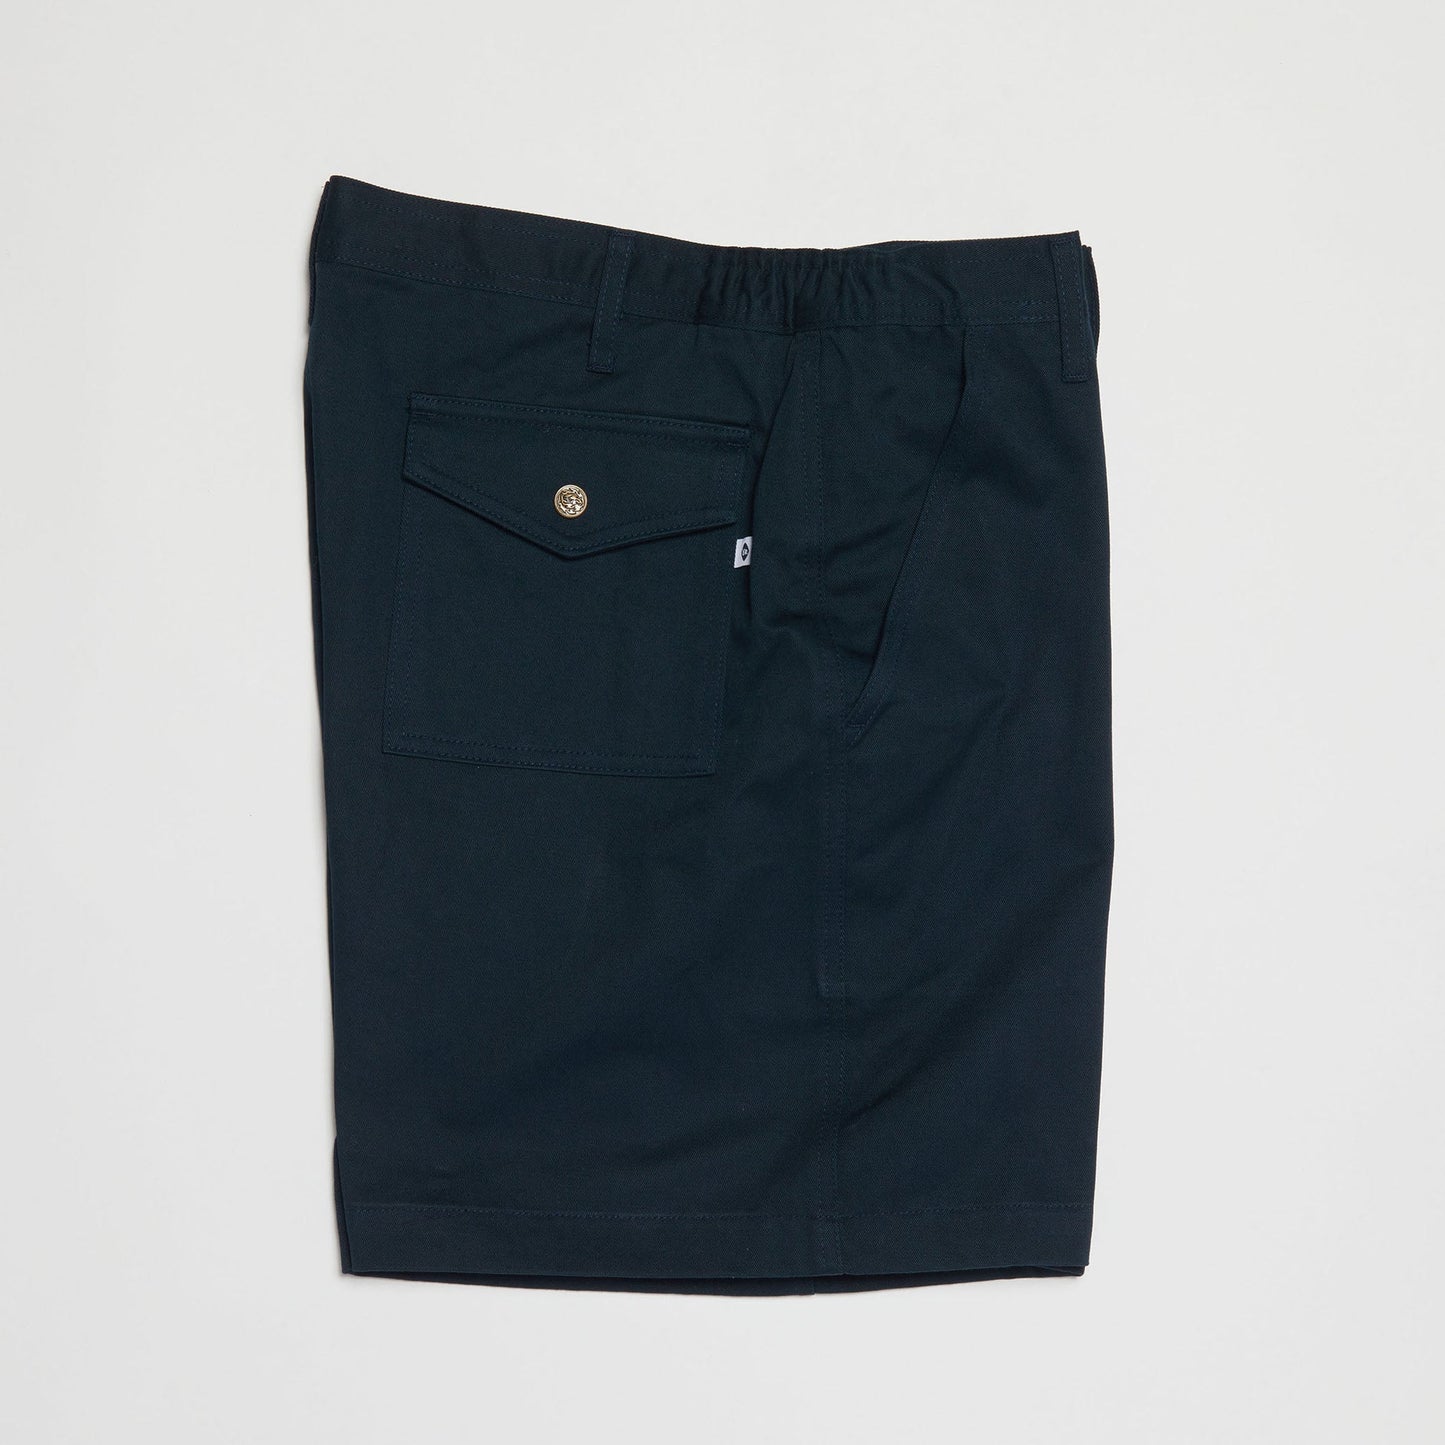 Boy Scout Shorts (Navy)